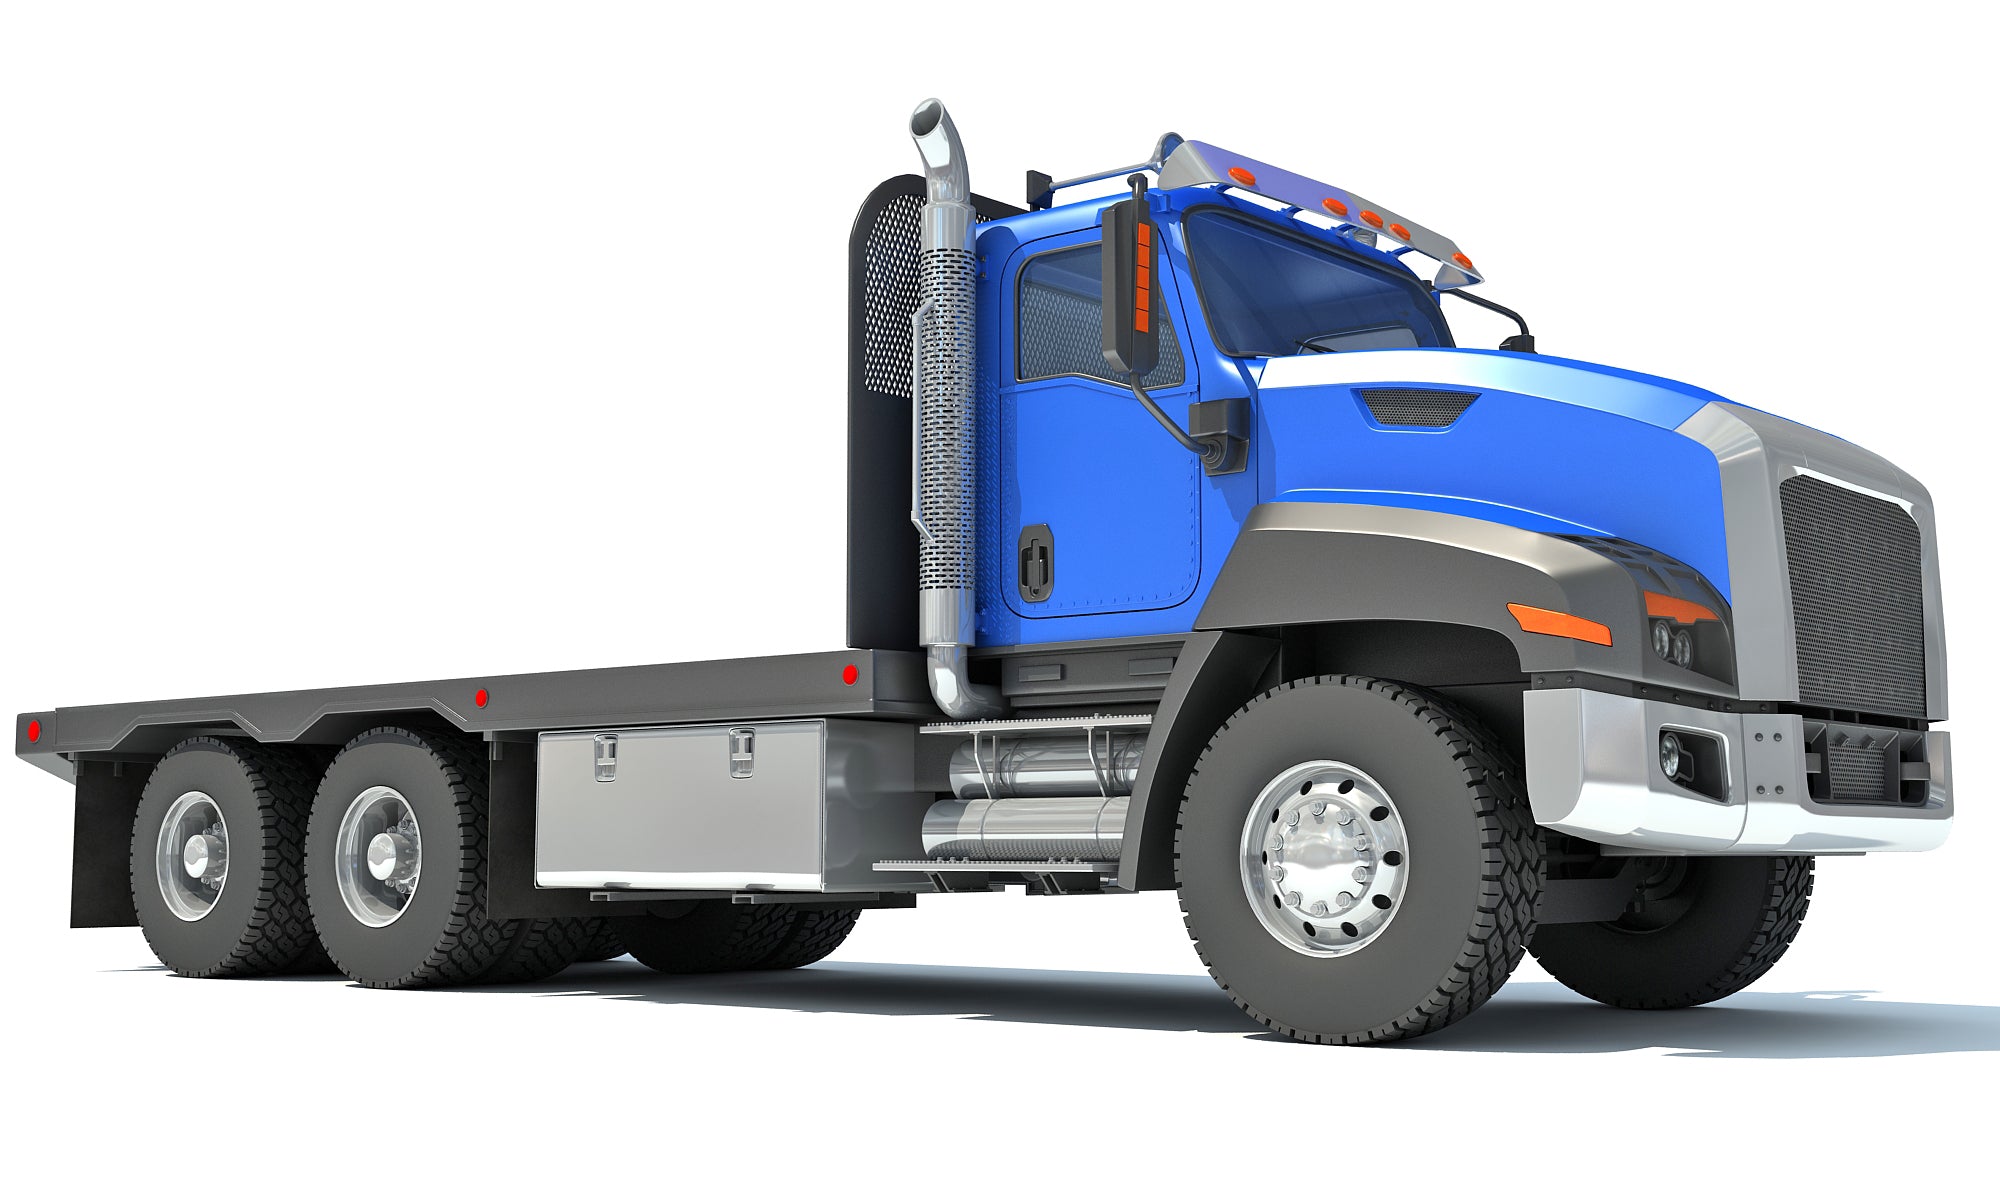 Flatbed Truck 3D Model